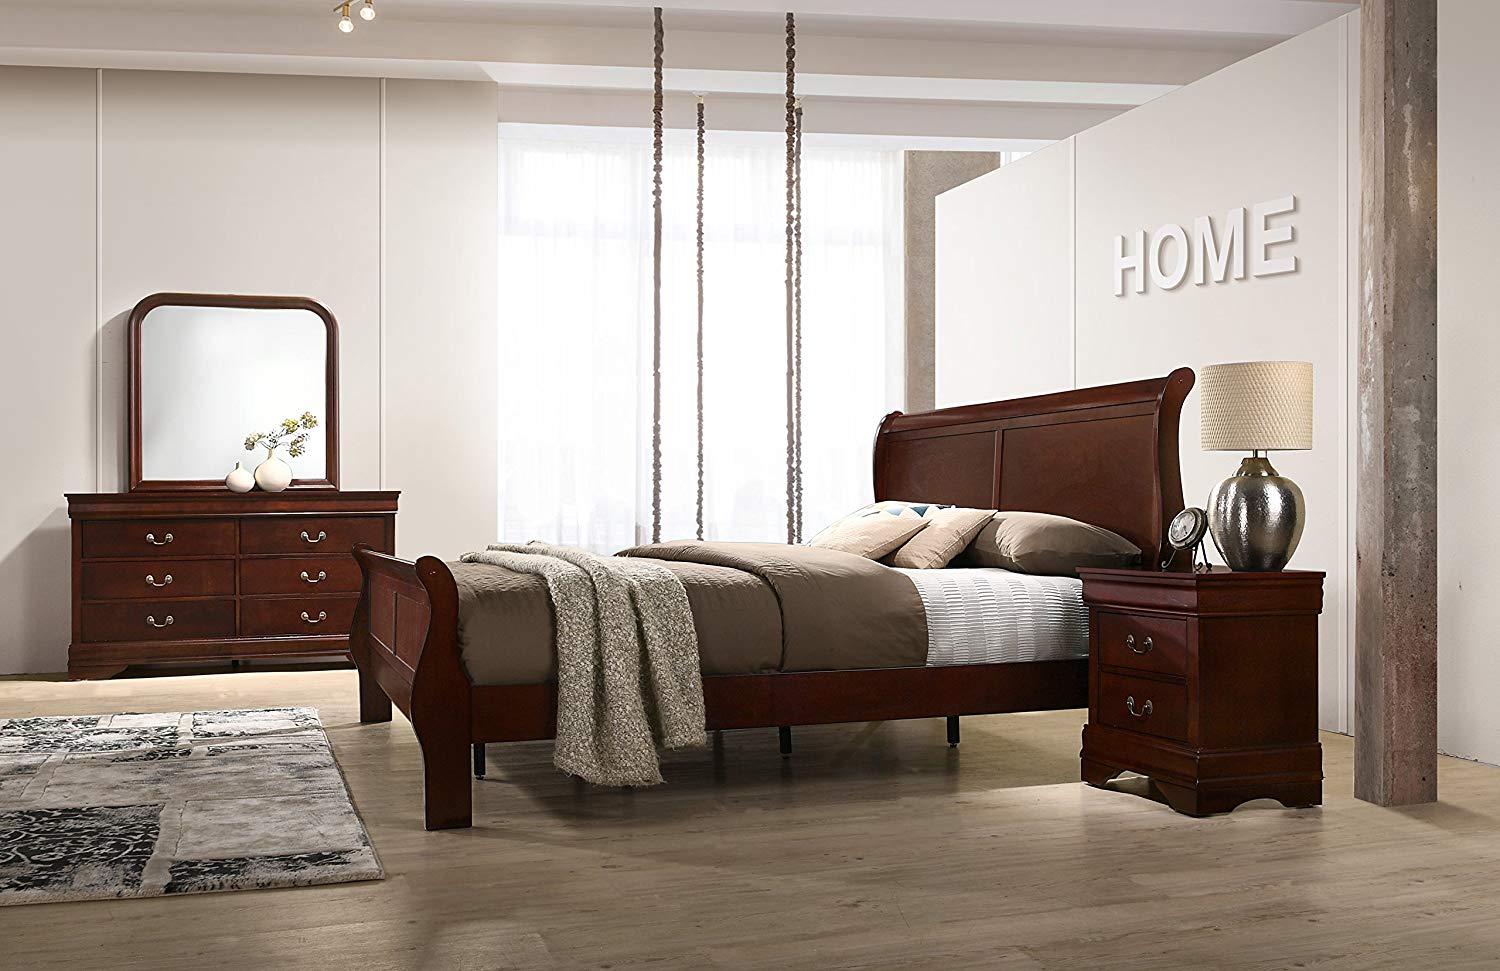 kane furniture louis philippe bedroom set